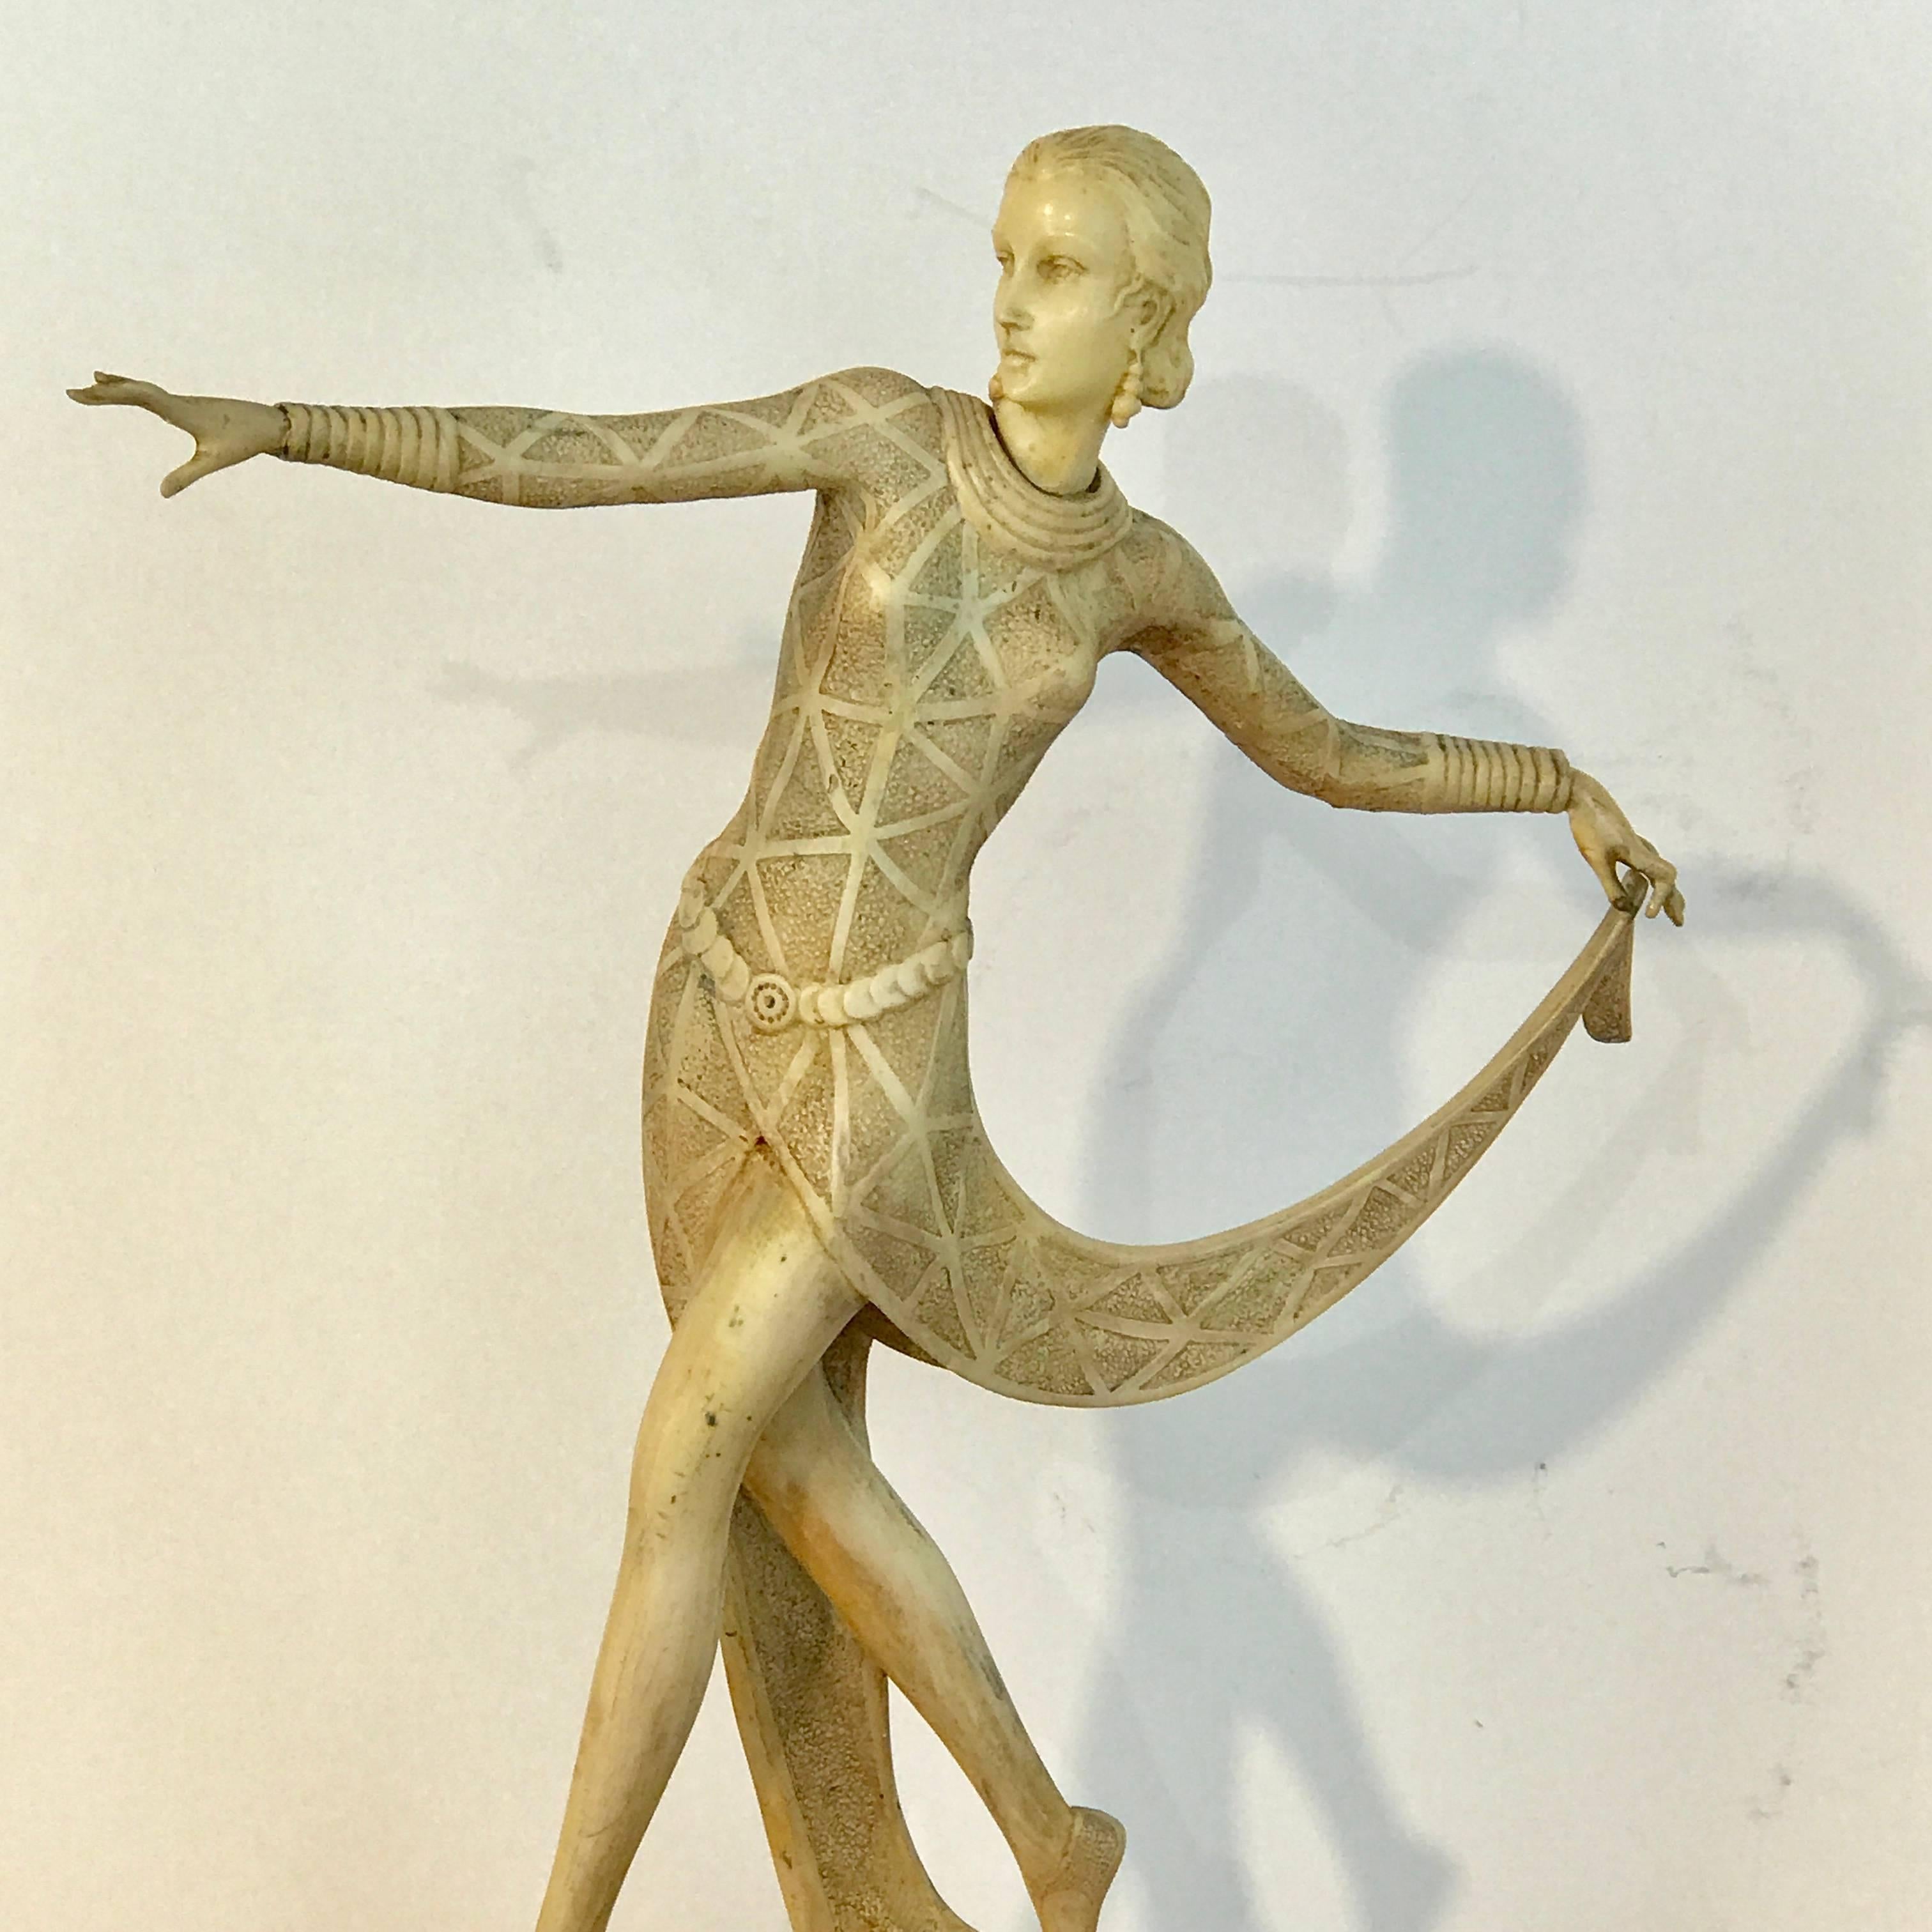 Art Deco Ivorine* dancer statue signed (Josef) Lorenzl, raised on a green onyx pedestal base
Ivorine is man-made substitute for ivory.